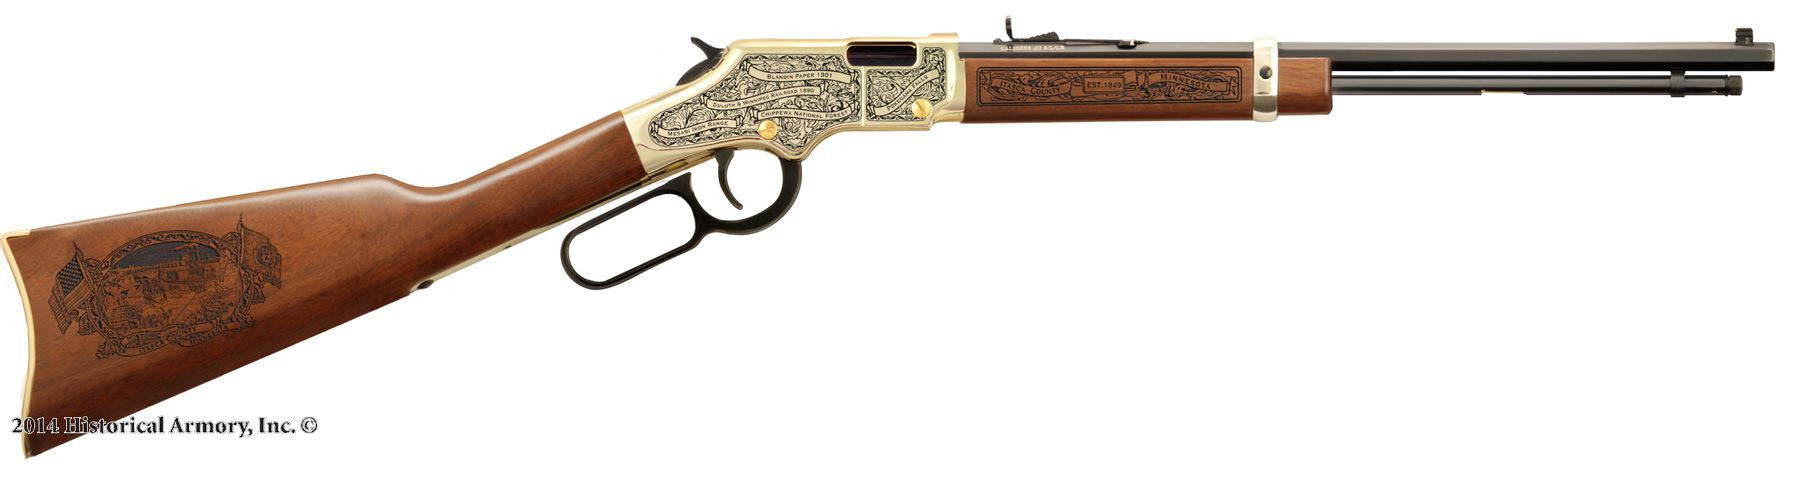 Itasca county minnesota engraved rifle H004